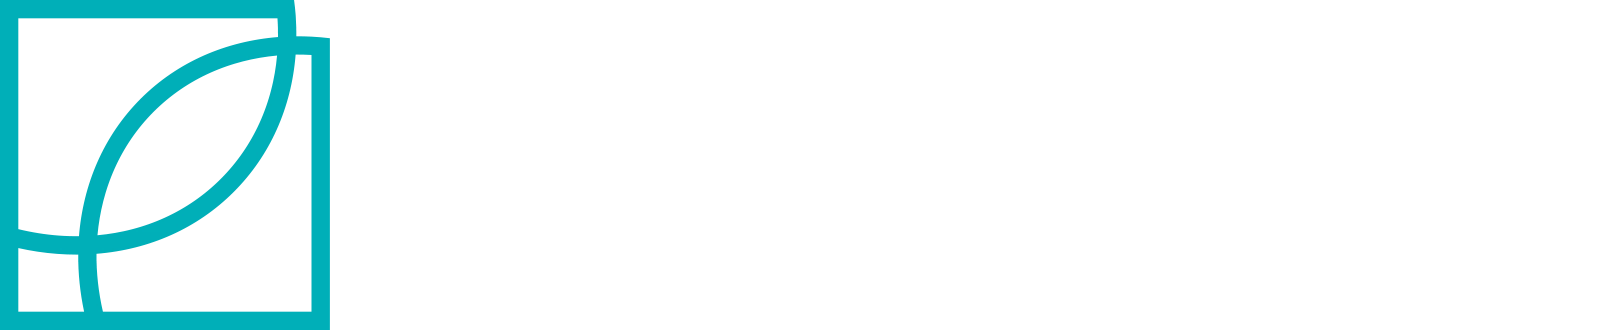 Createview AS logo